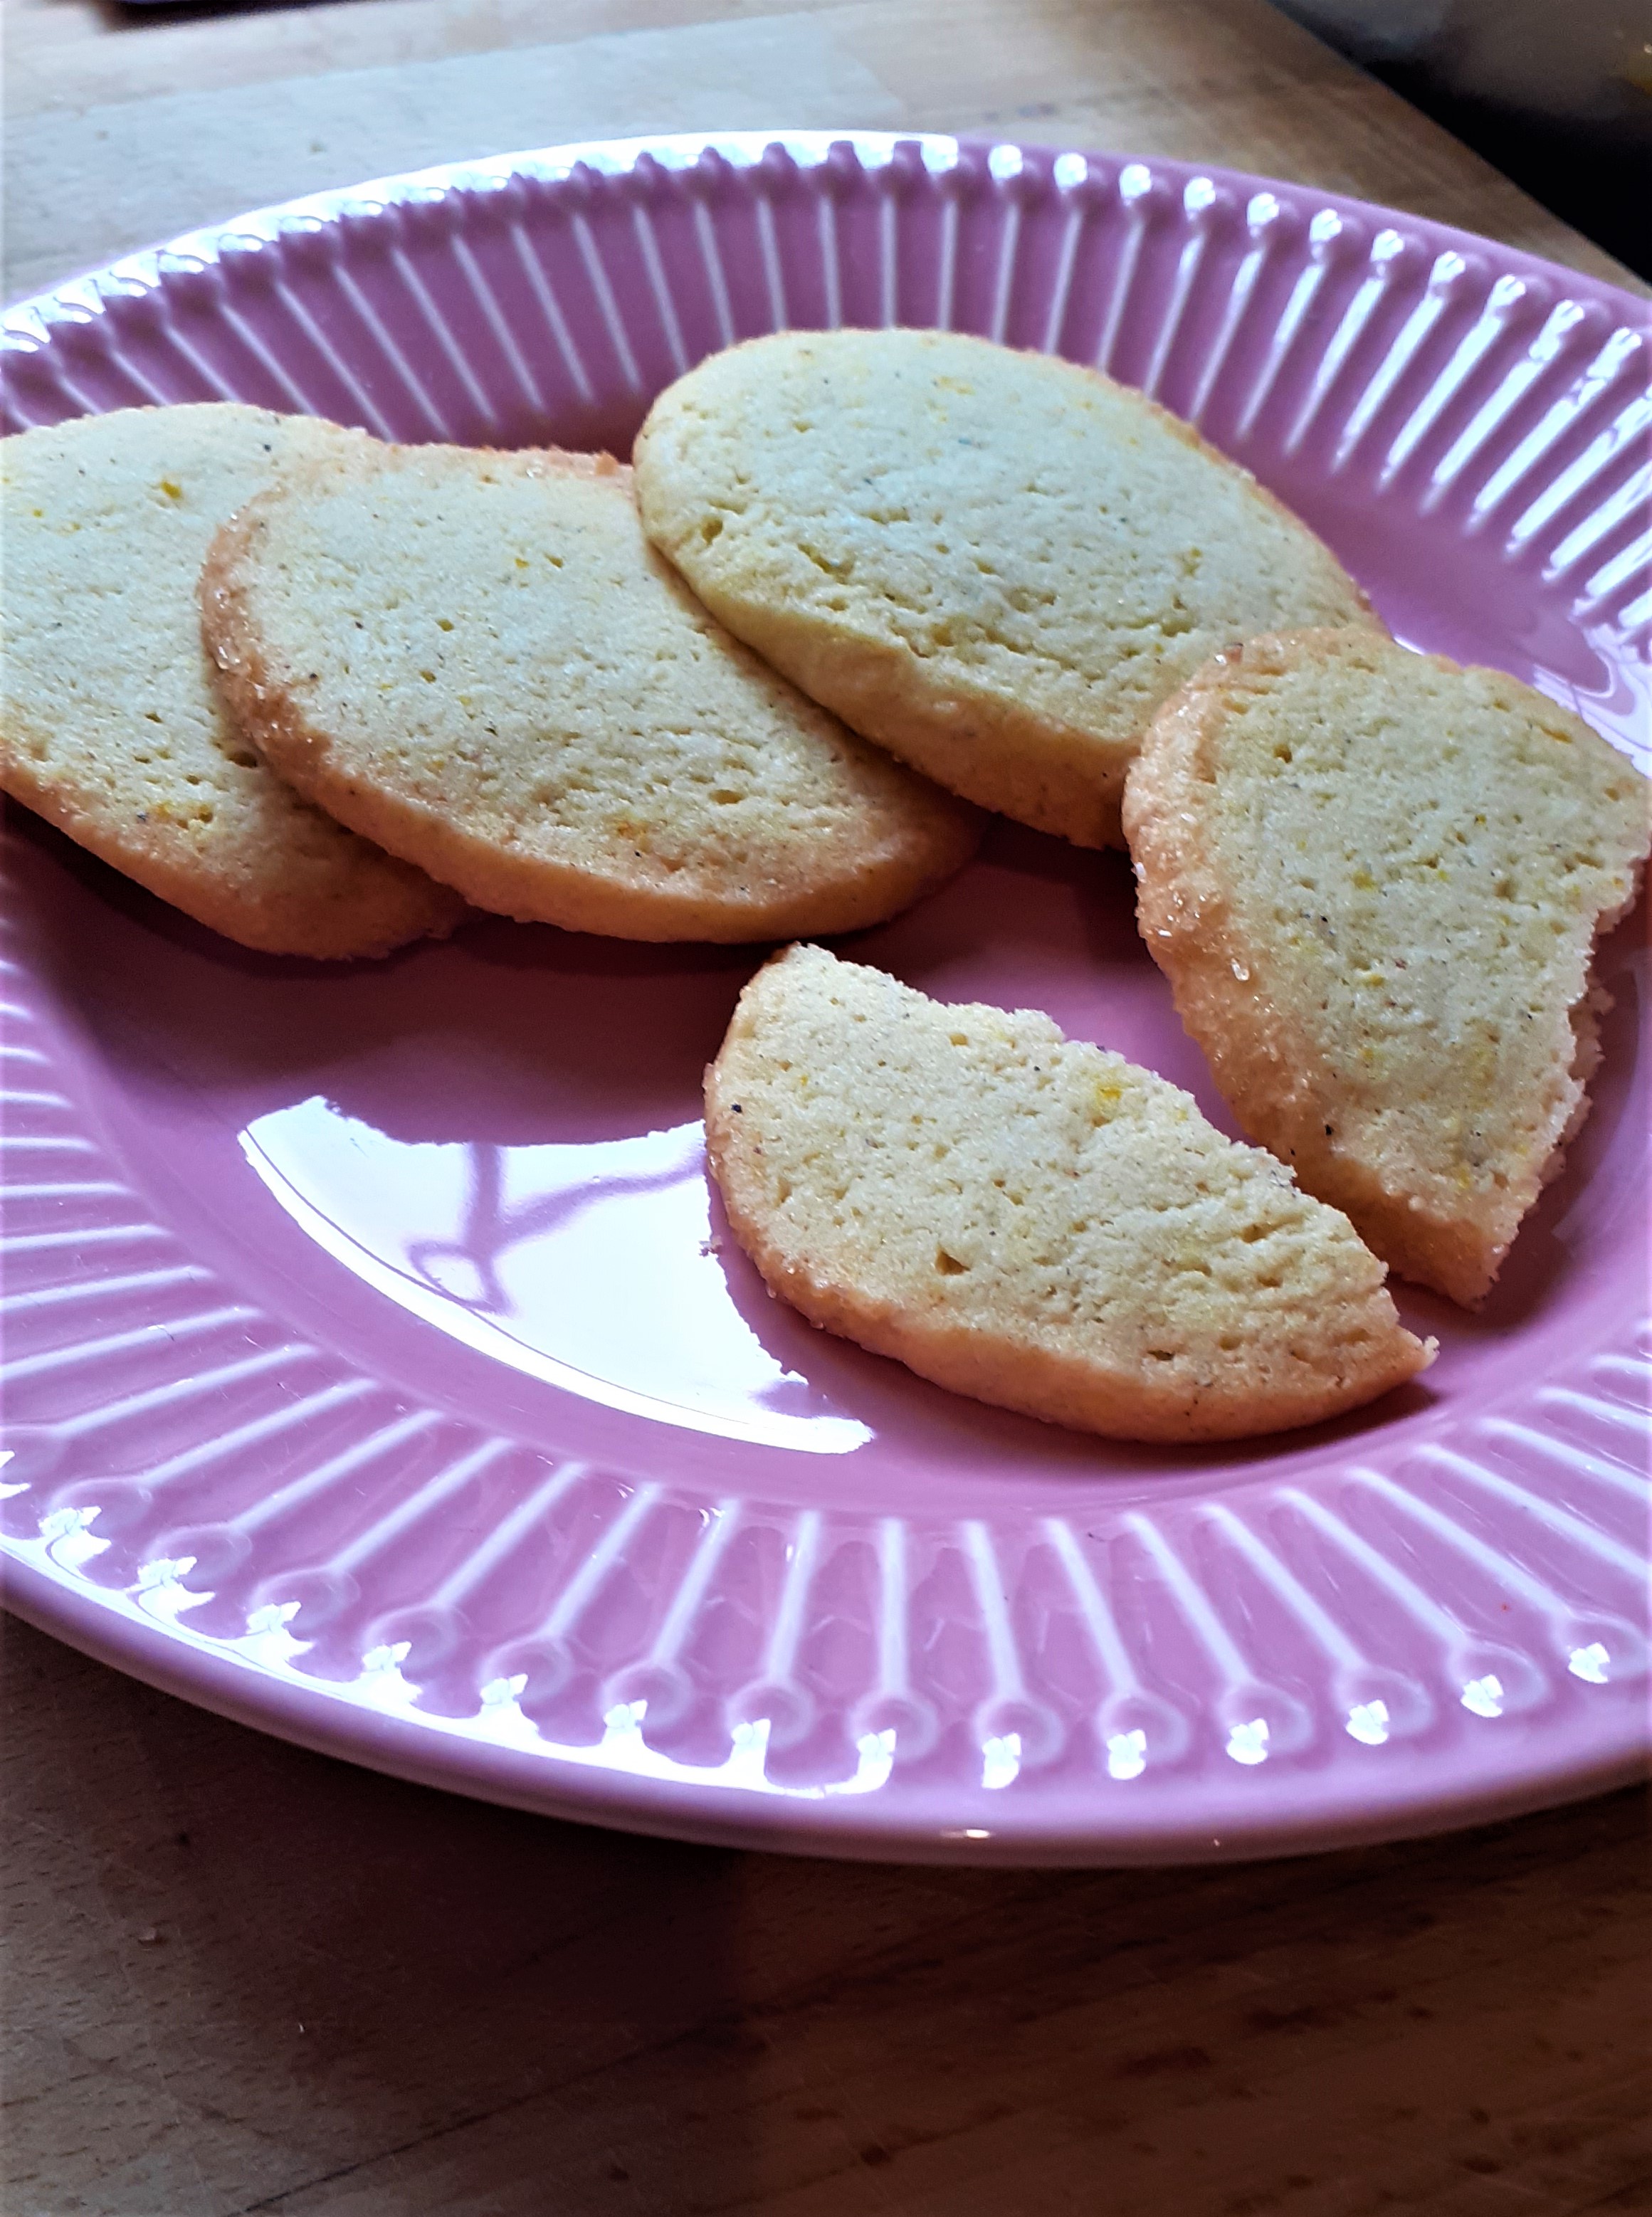 Swedish cardamom cookies